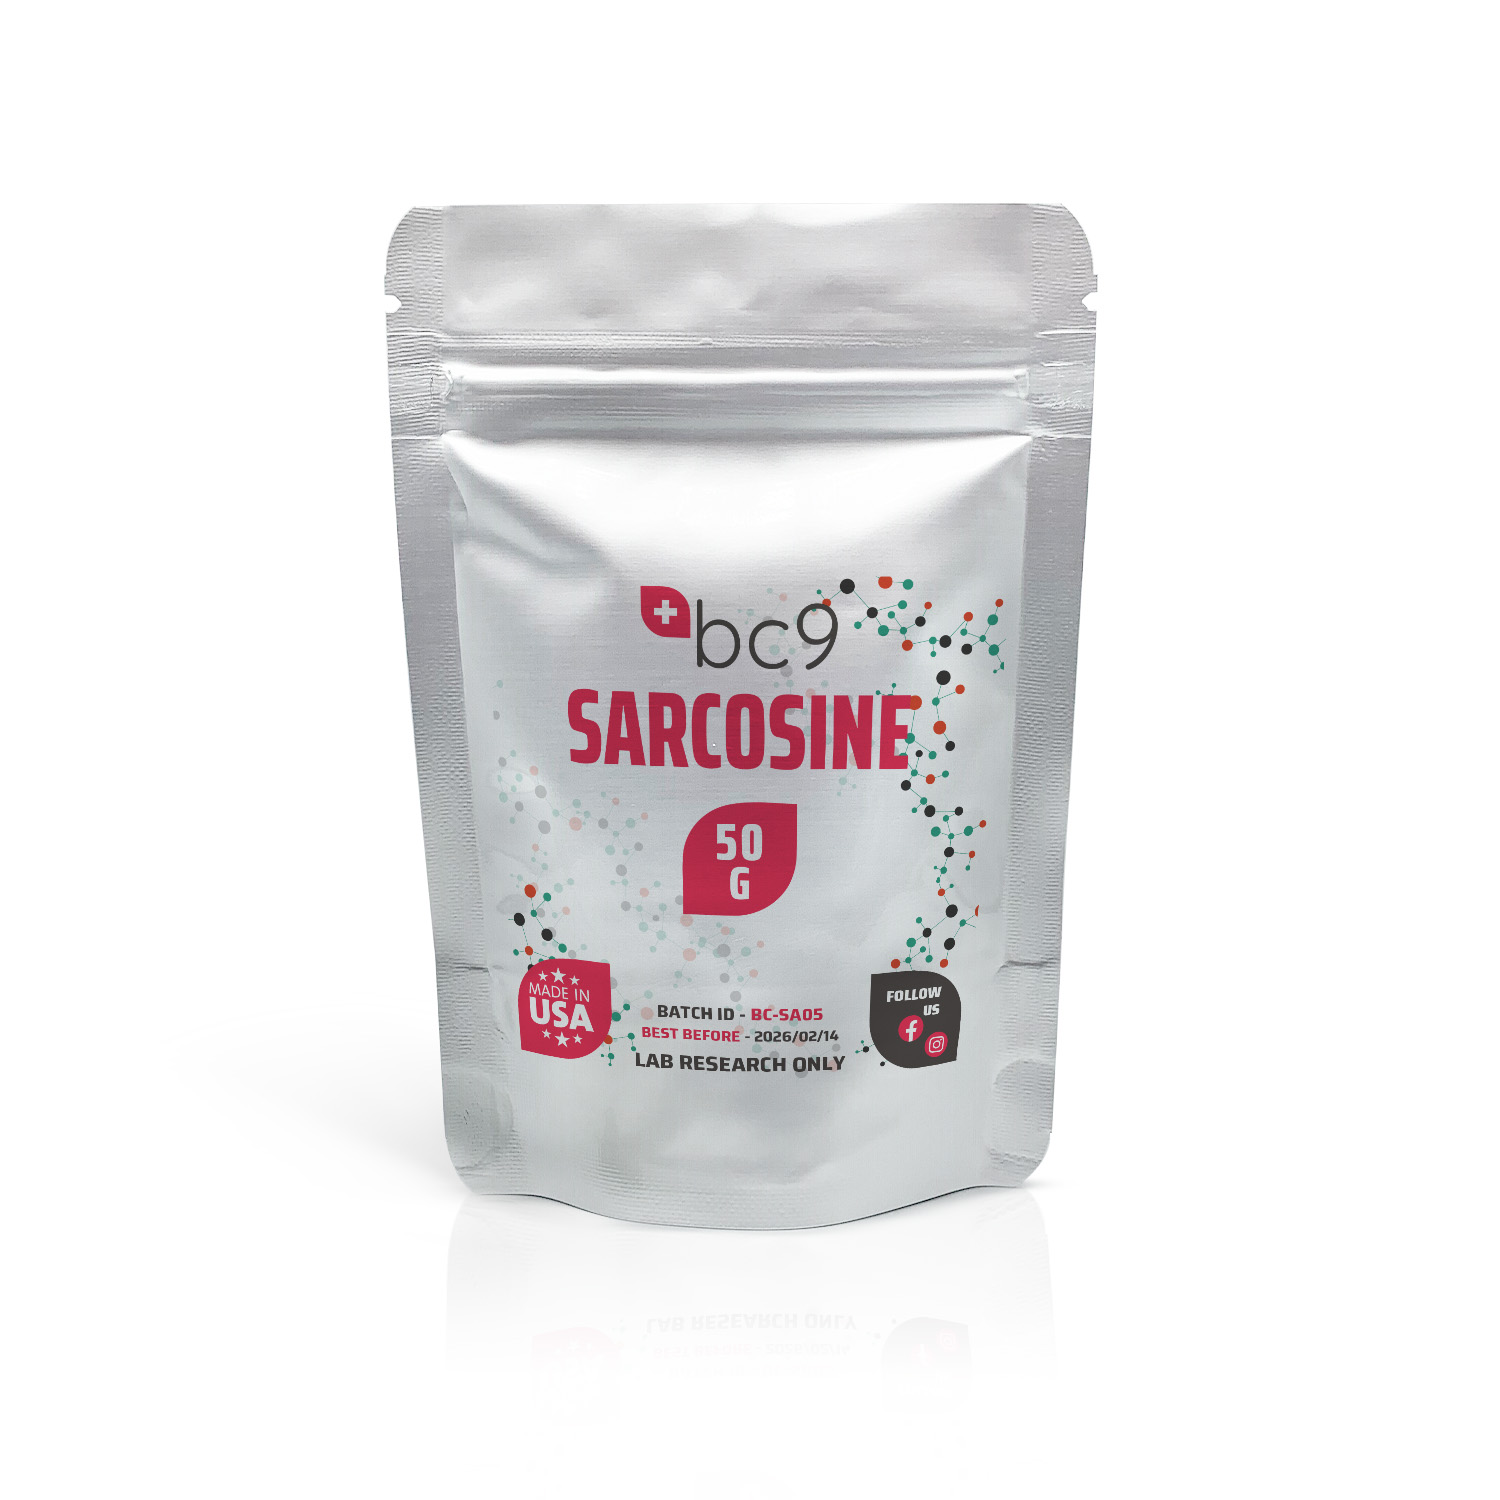 Sarcosine Powder For Sale | Fast Shiping | BC9.org